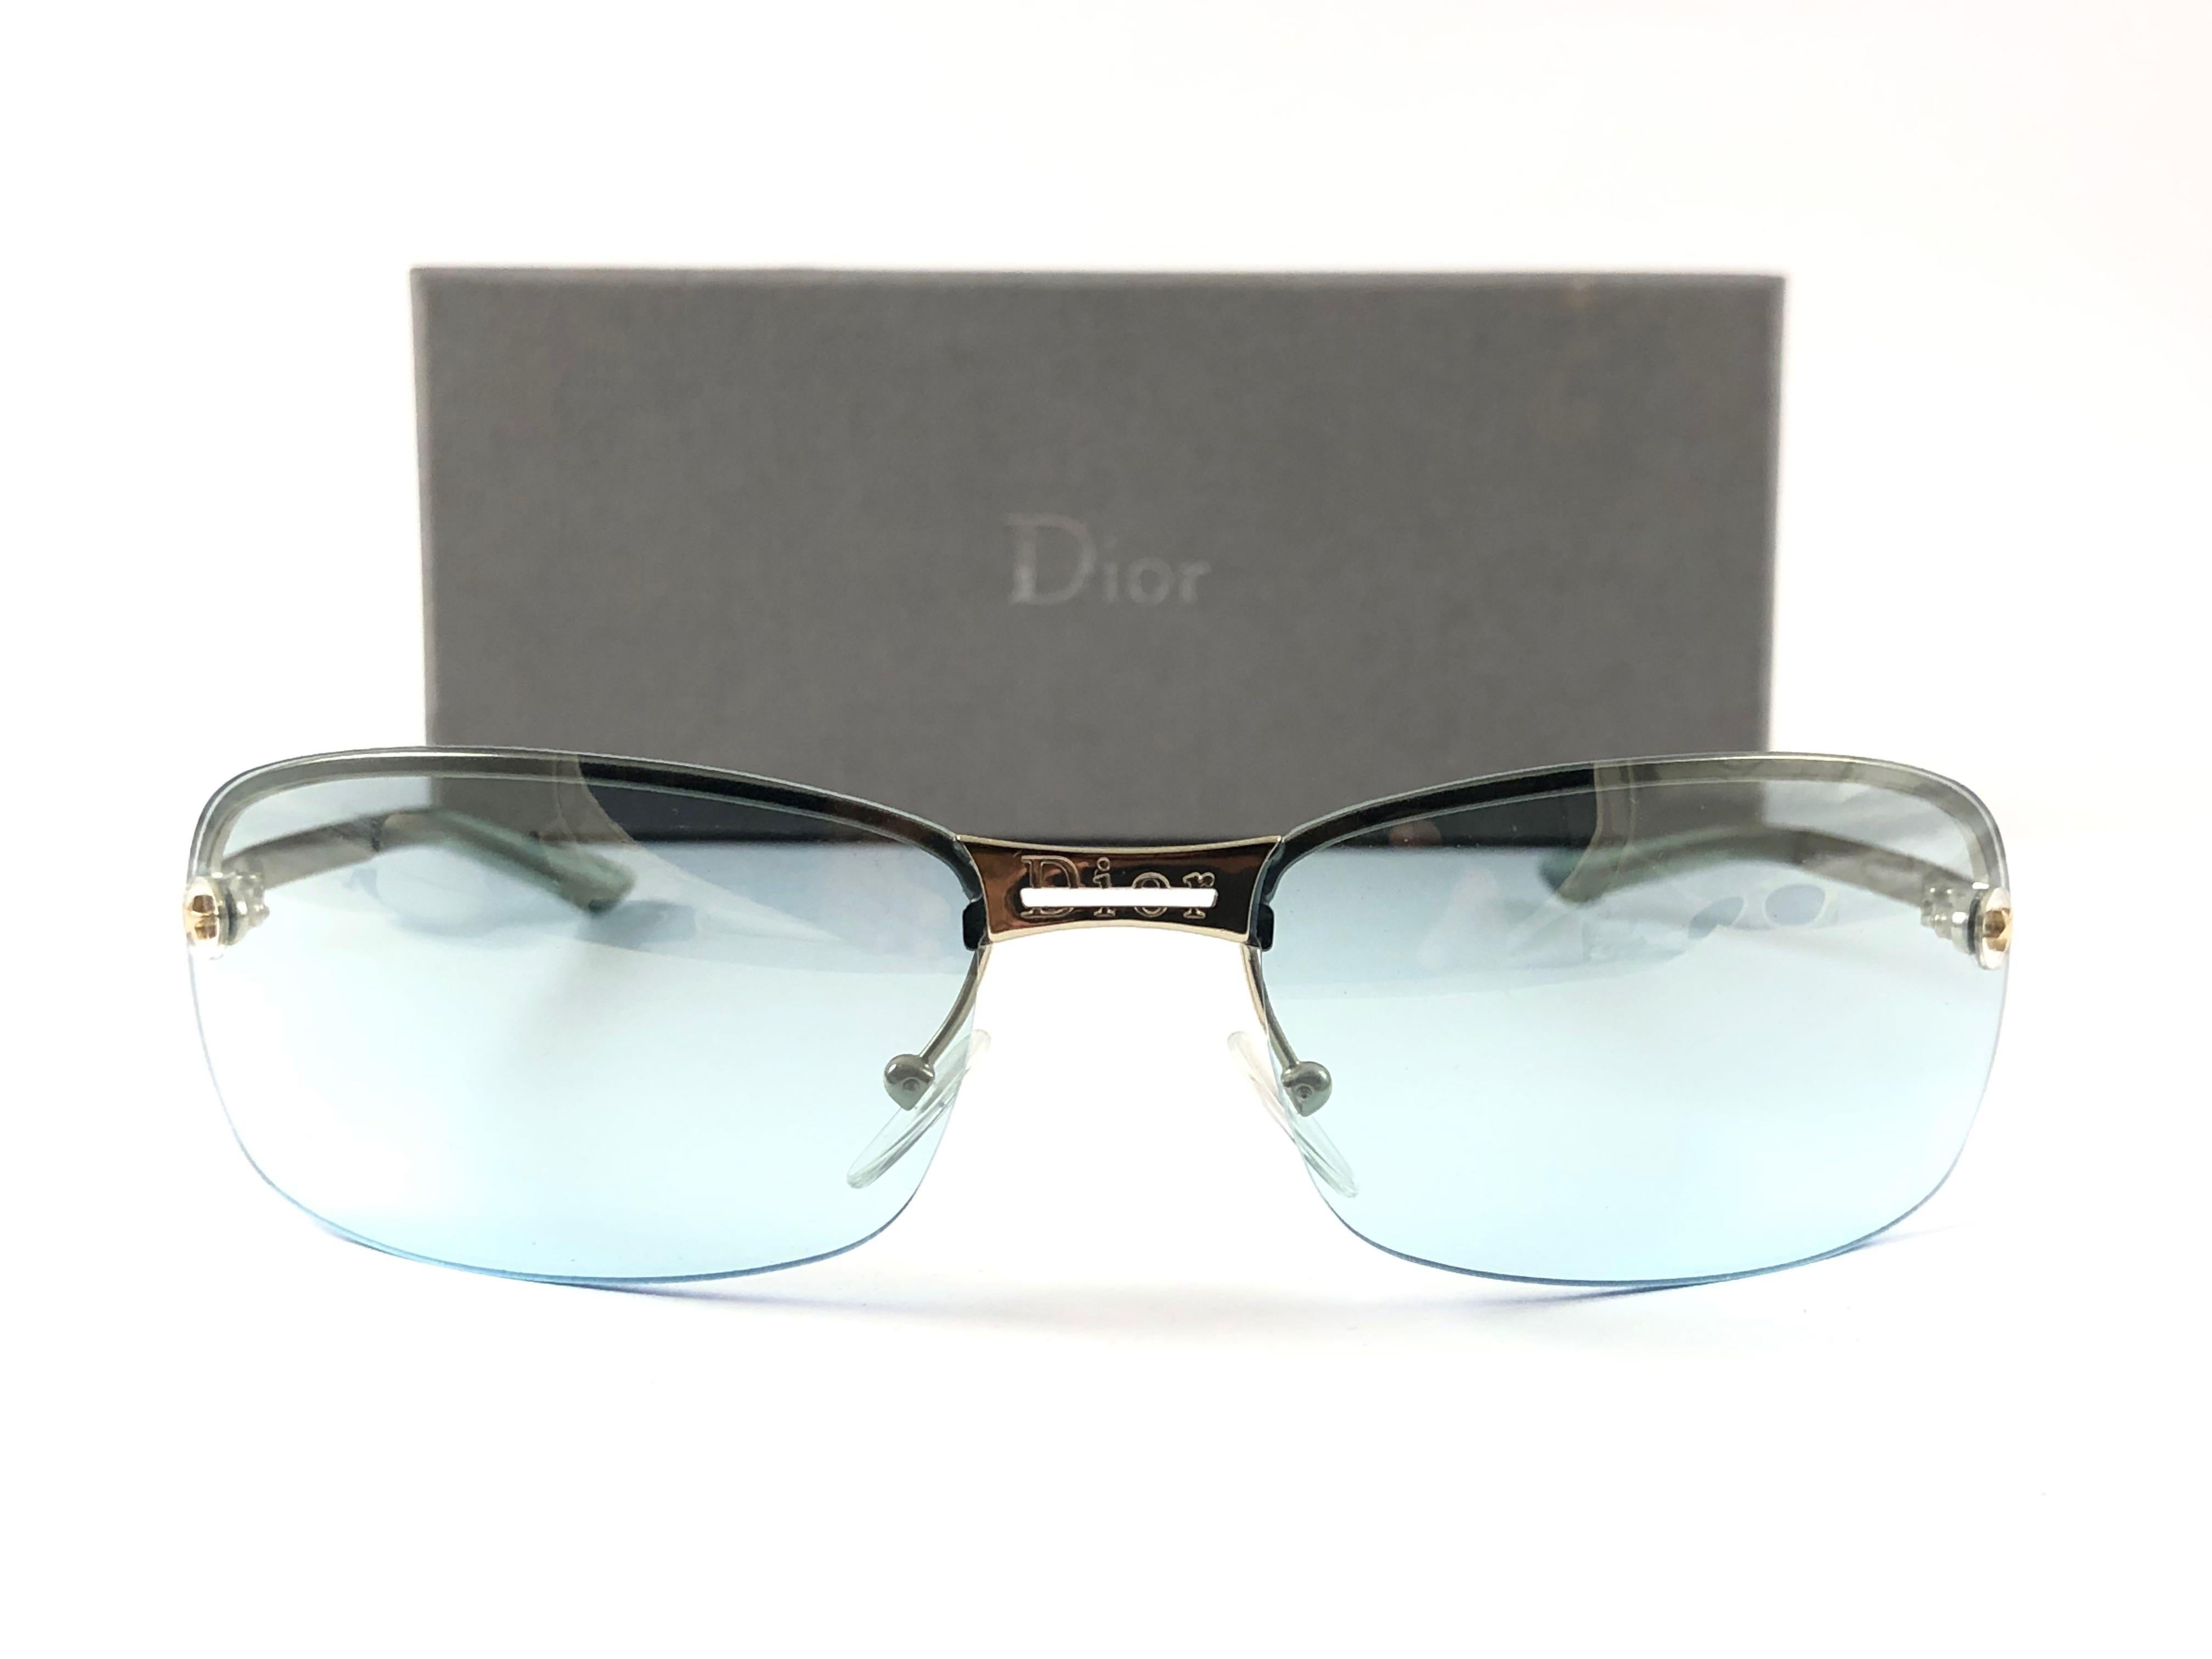 Vintage Christian Dior ADIORABLE Wrap Sunglasses Fall 2000 Y2K 1